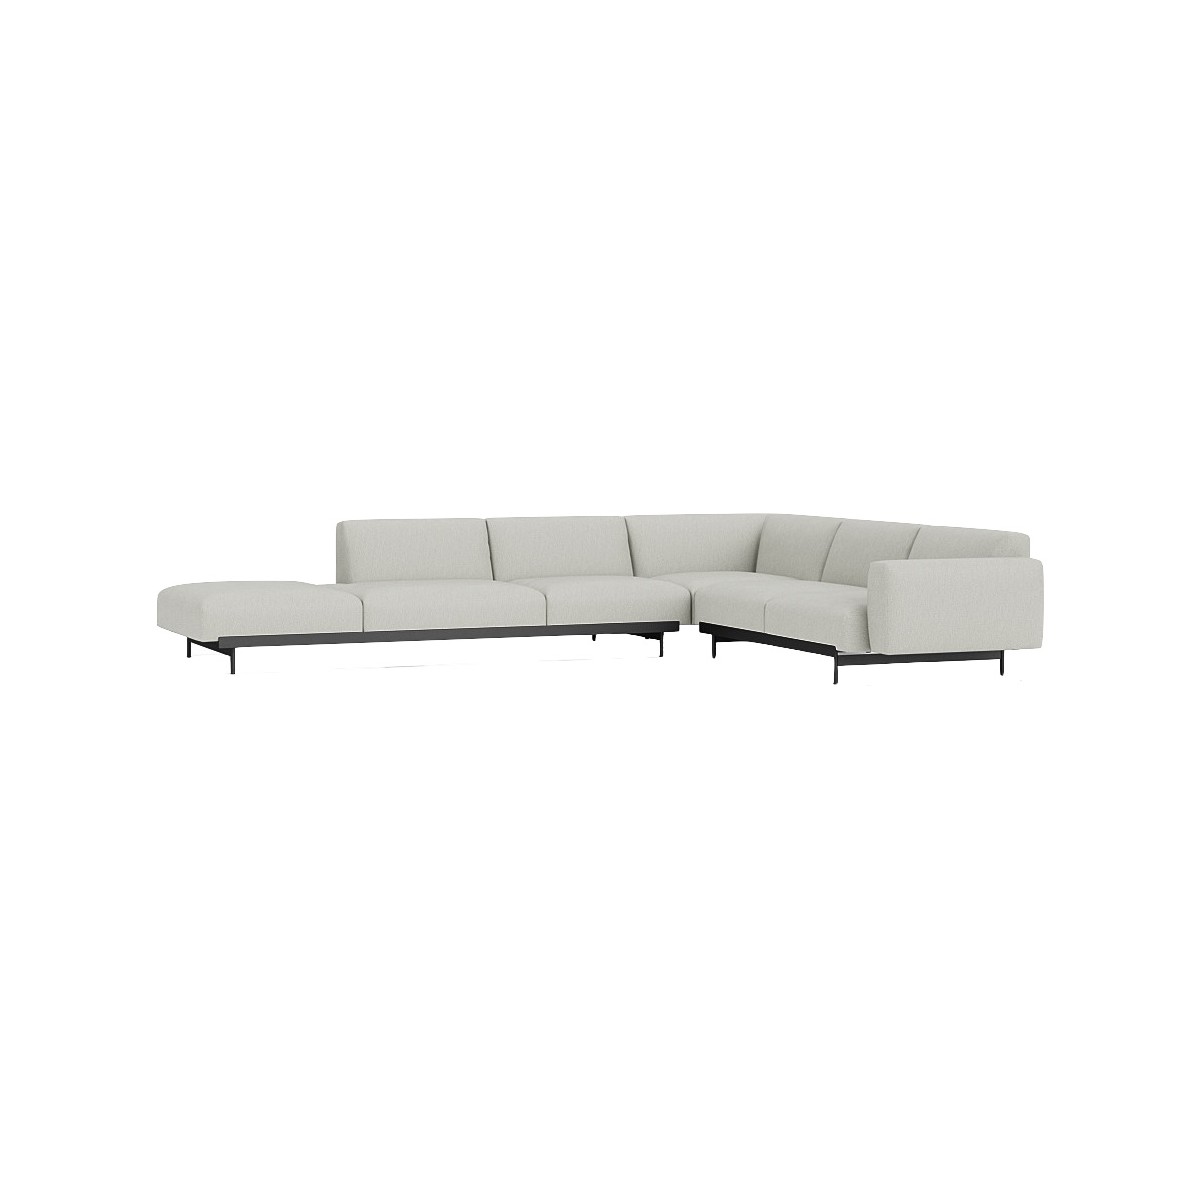 Clay 12 / black – In Situ corner sofa / configuration 6 – 368 x 287 cm